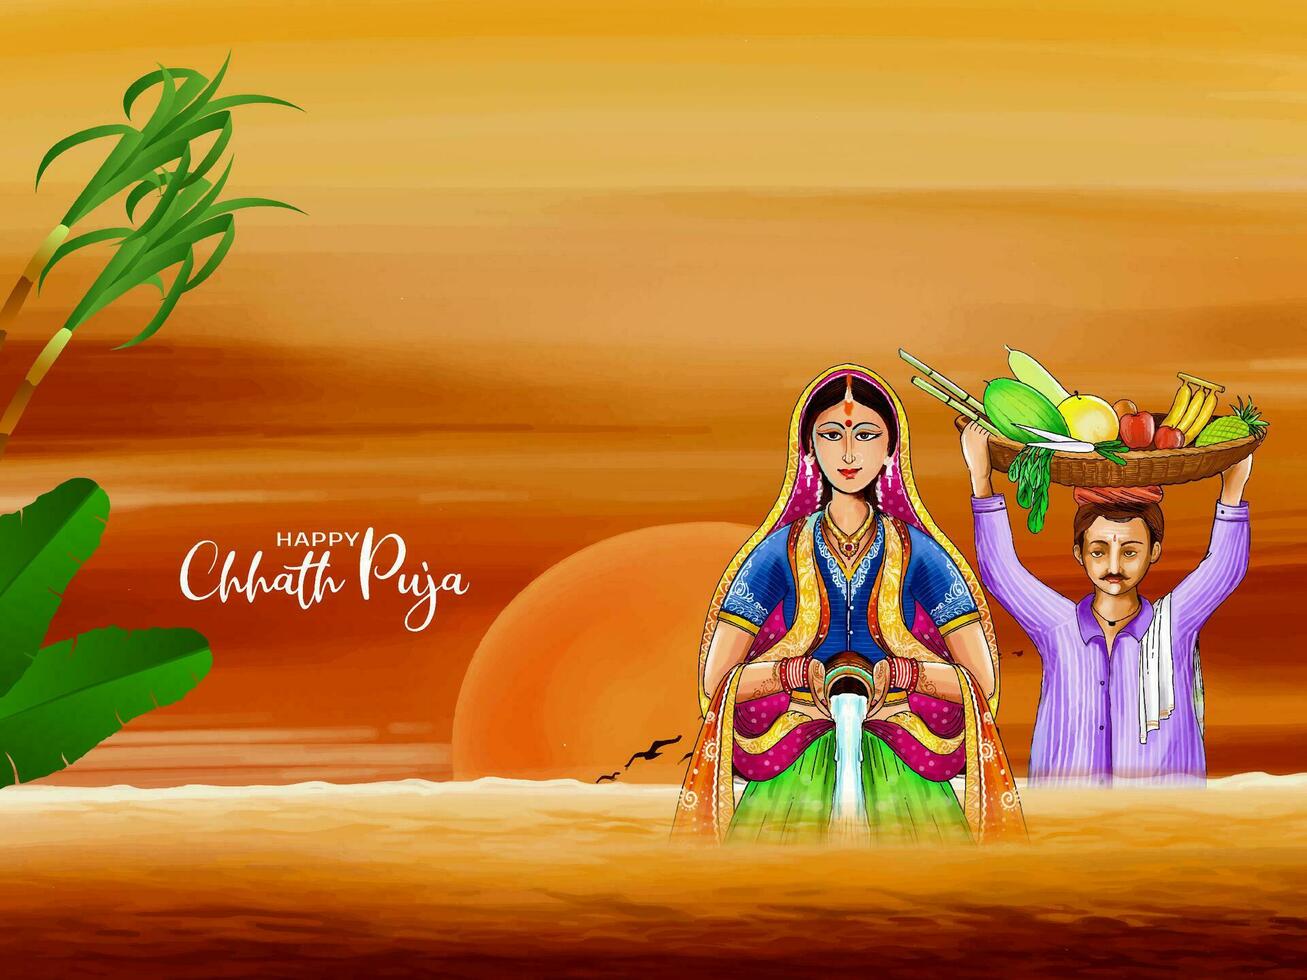 cultural contento chhath puja hindú festival saludo tarjeta vector